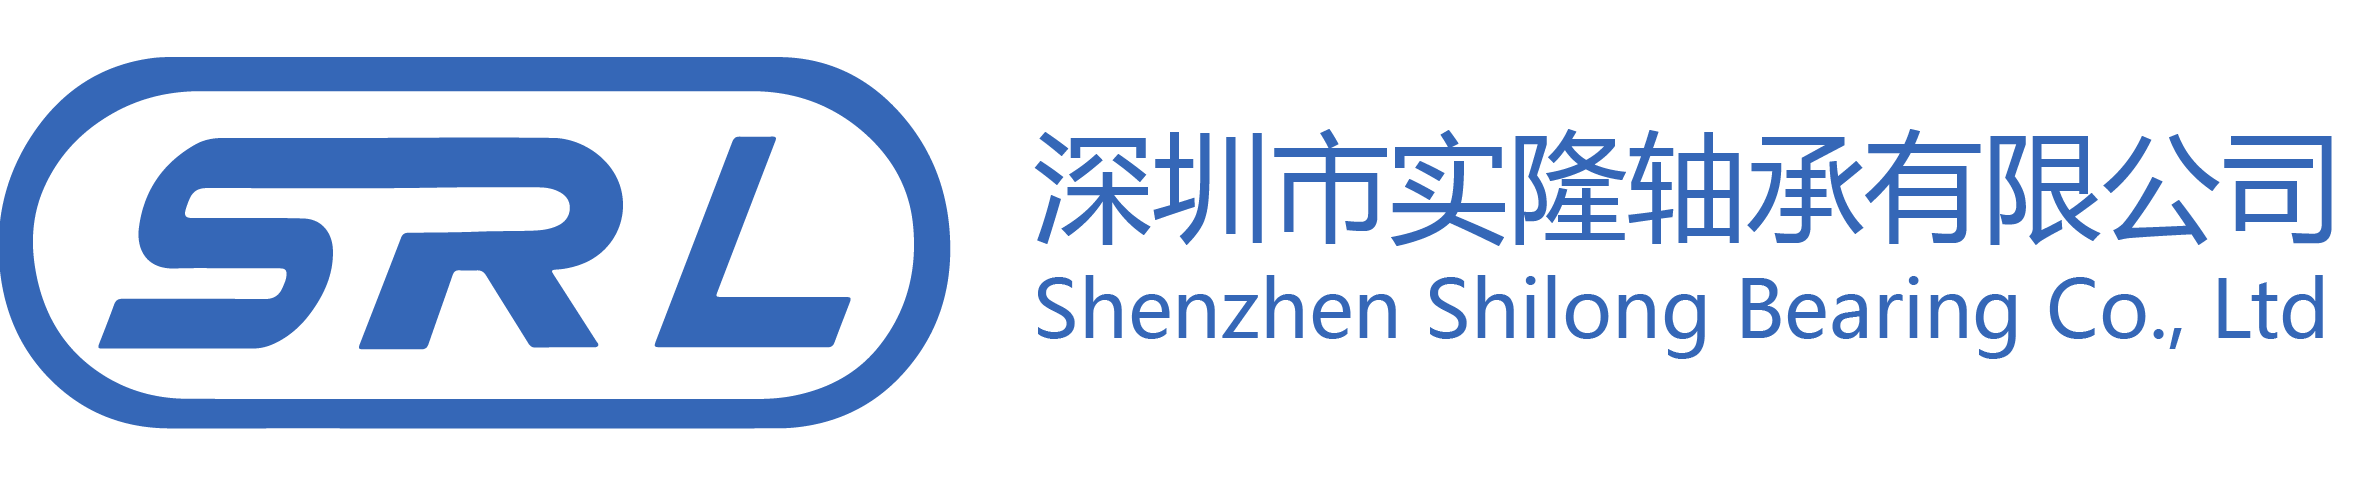 Shenzhen Shilong Bearing Co., Ltd 深圳市实隆轴承有限公司